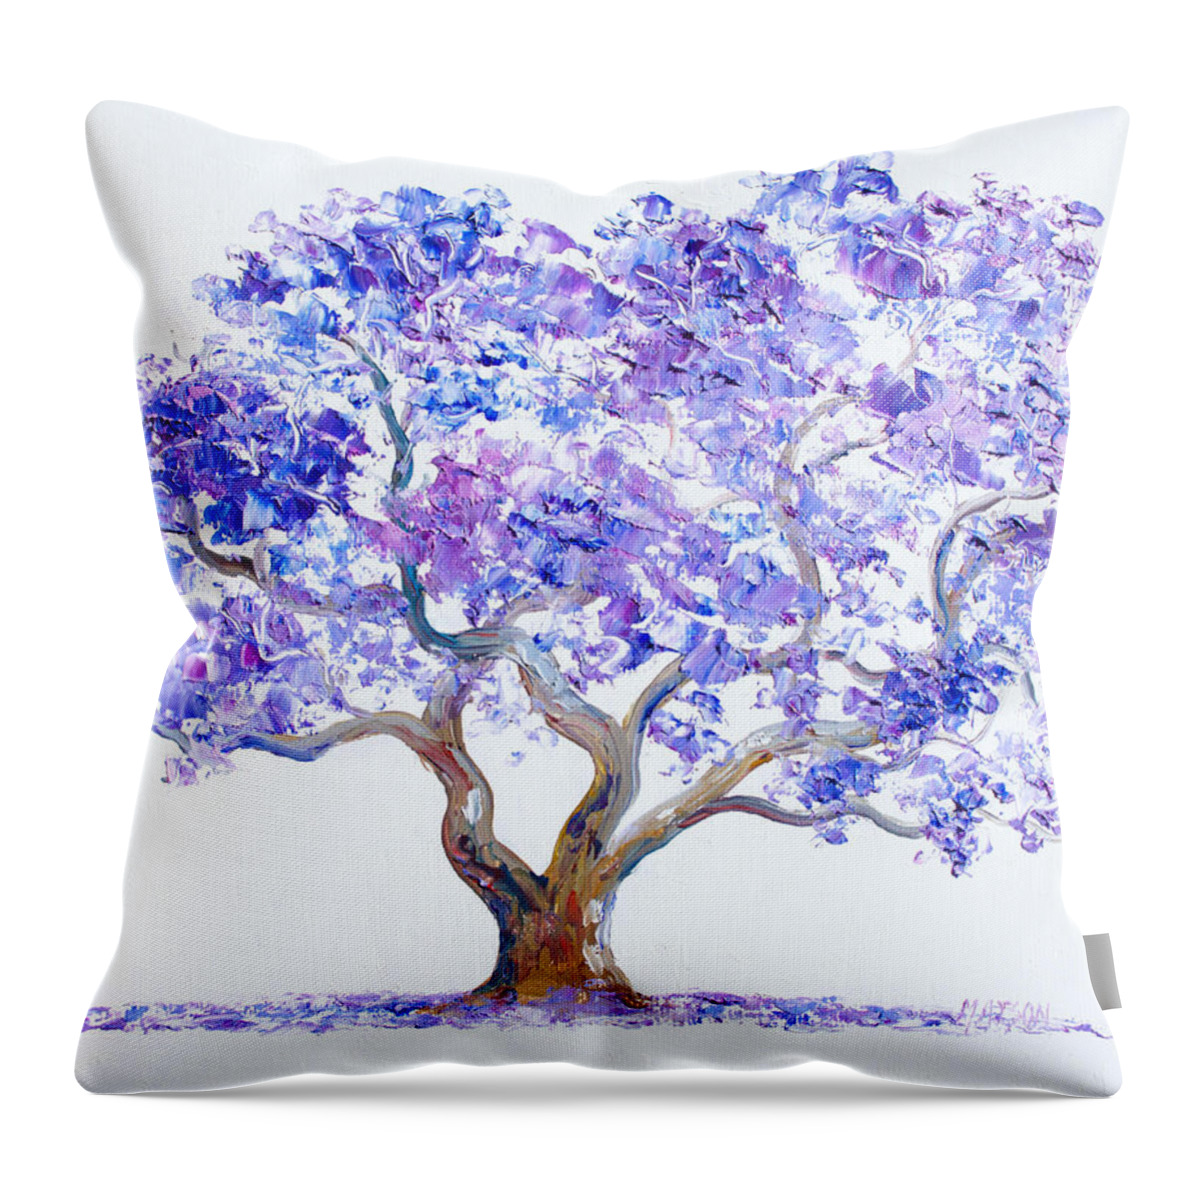 Jacaranda Tree Throw Pillow featuring the painting Jacaranda Tree by Jan Matson